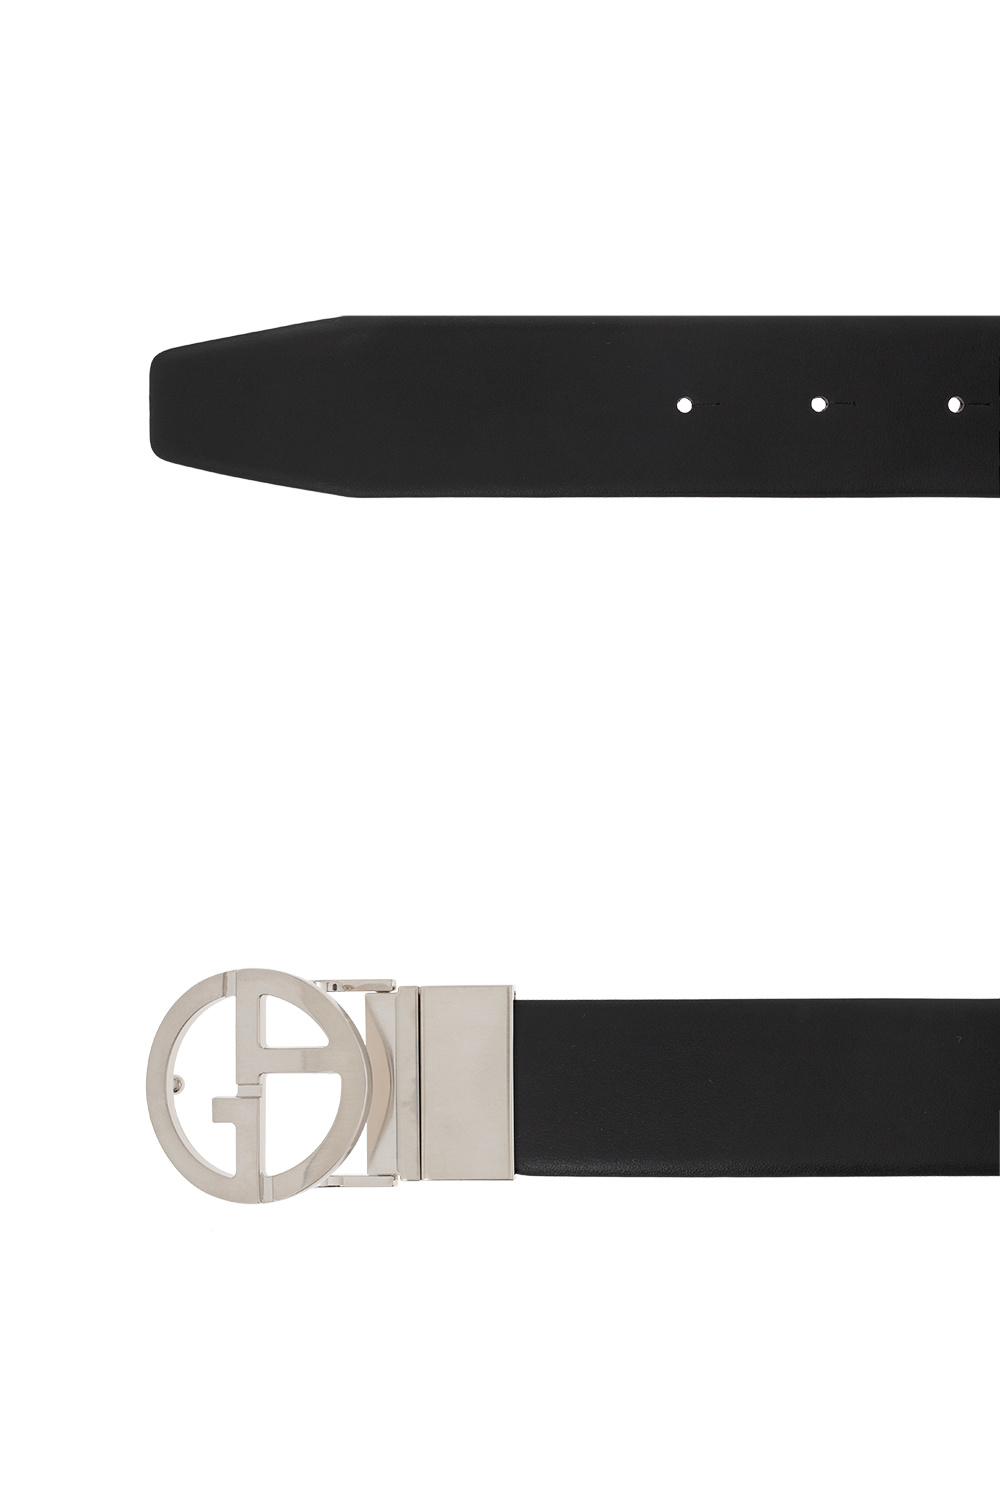 Giorgio Armani Reversible belt with logo